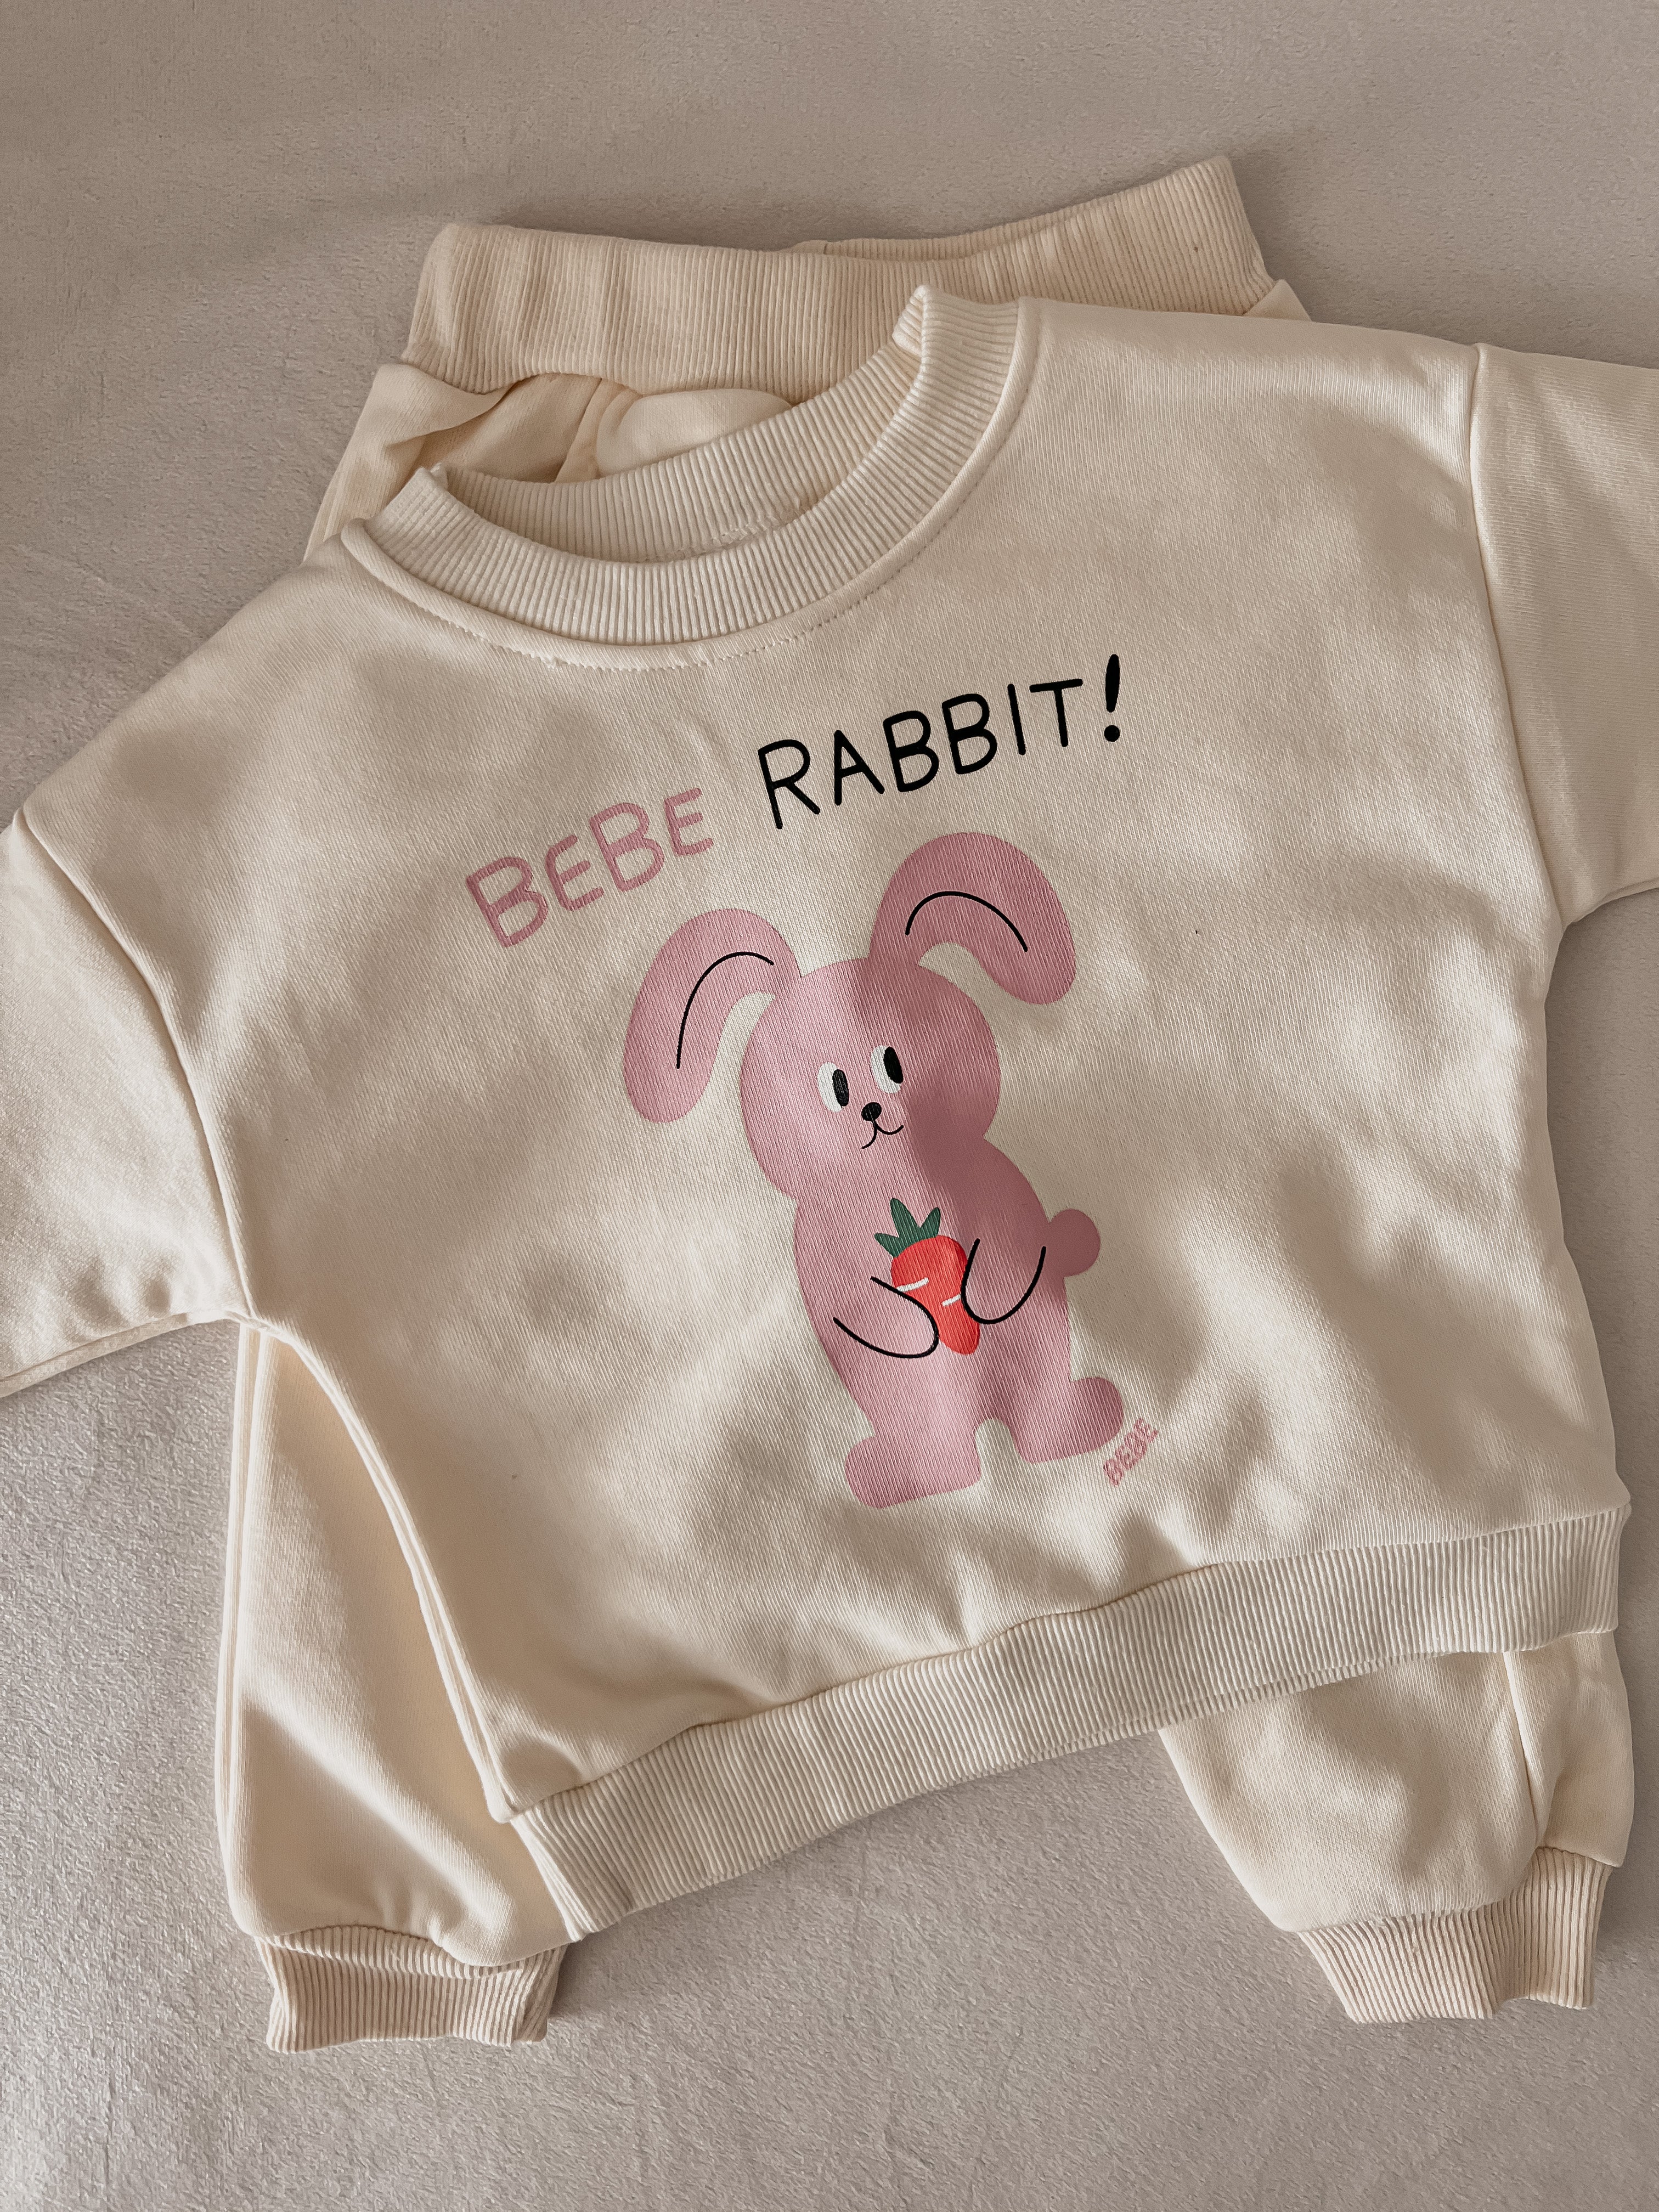 Bebe Rabbit